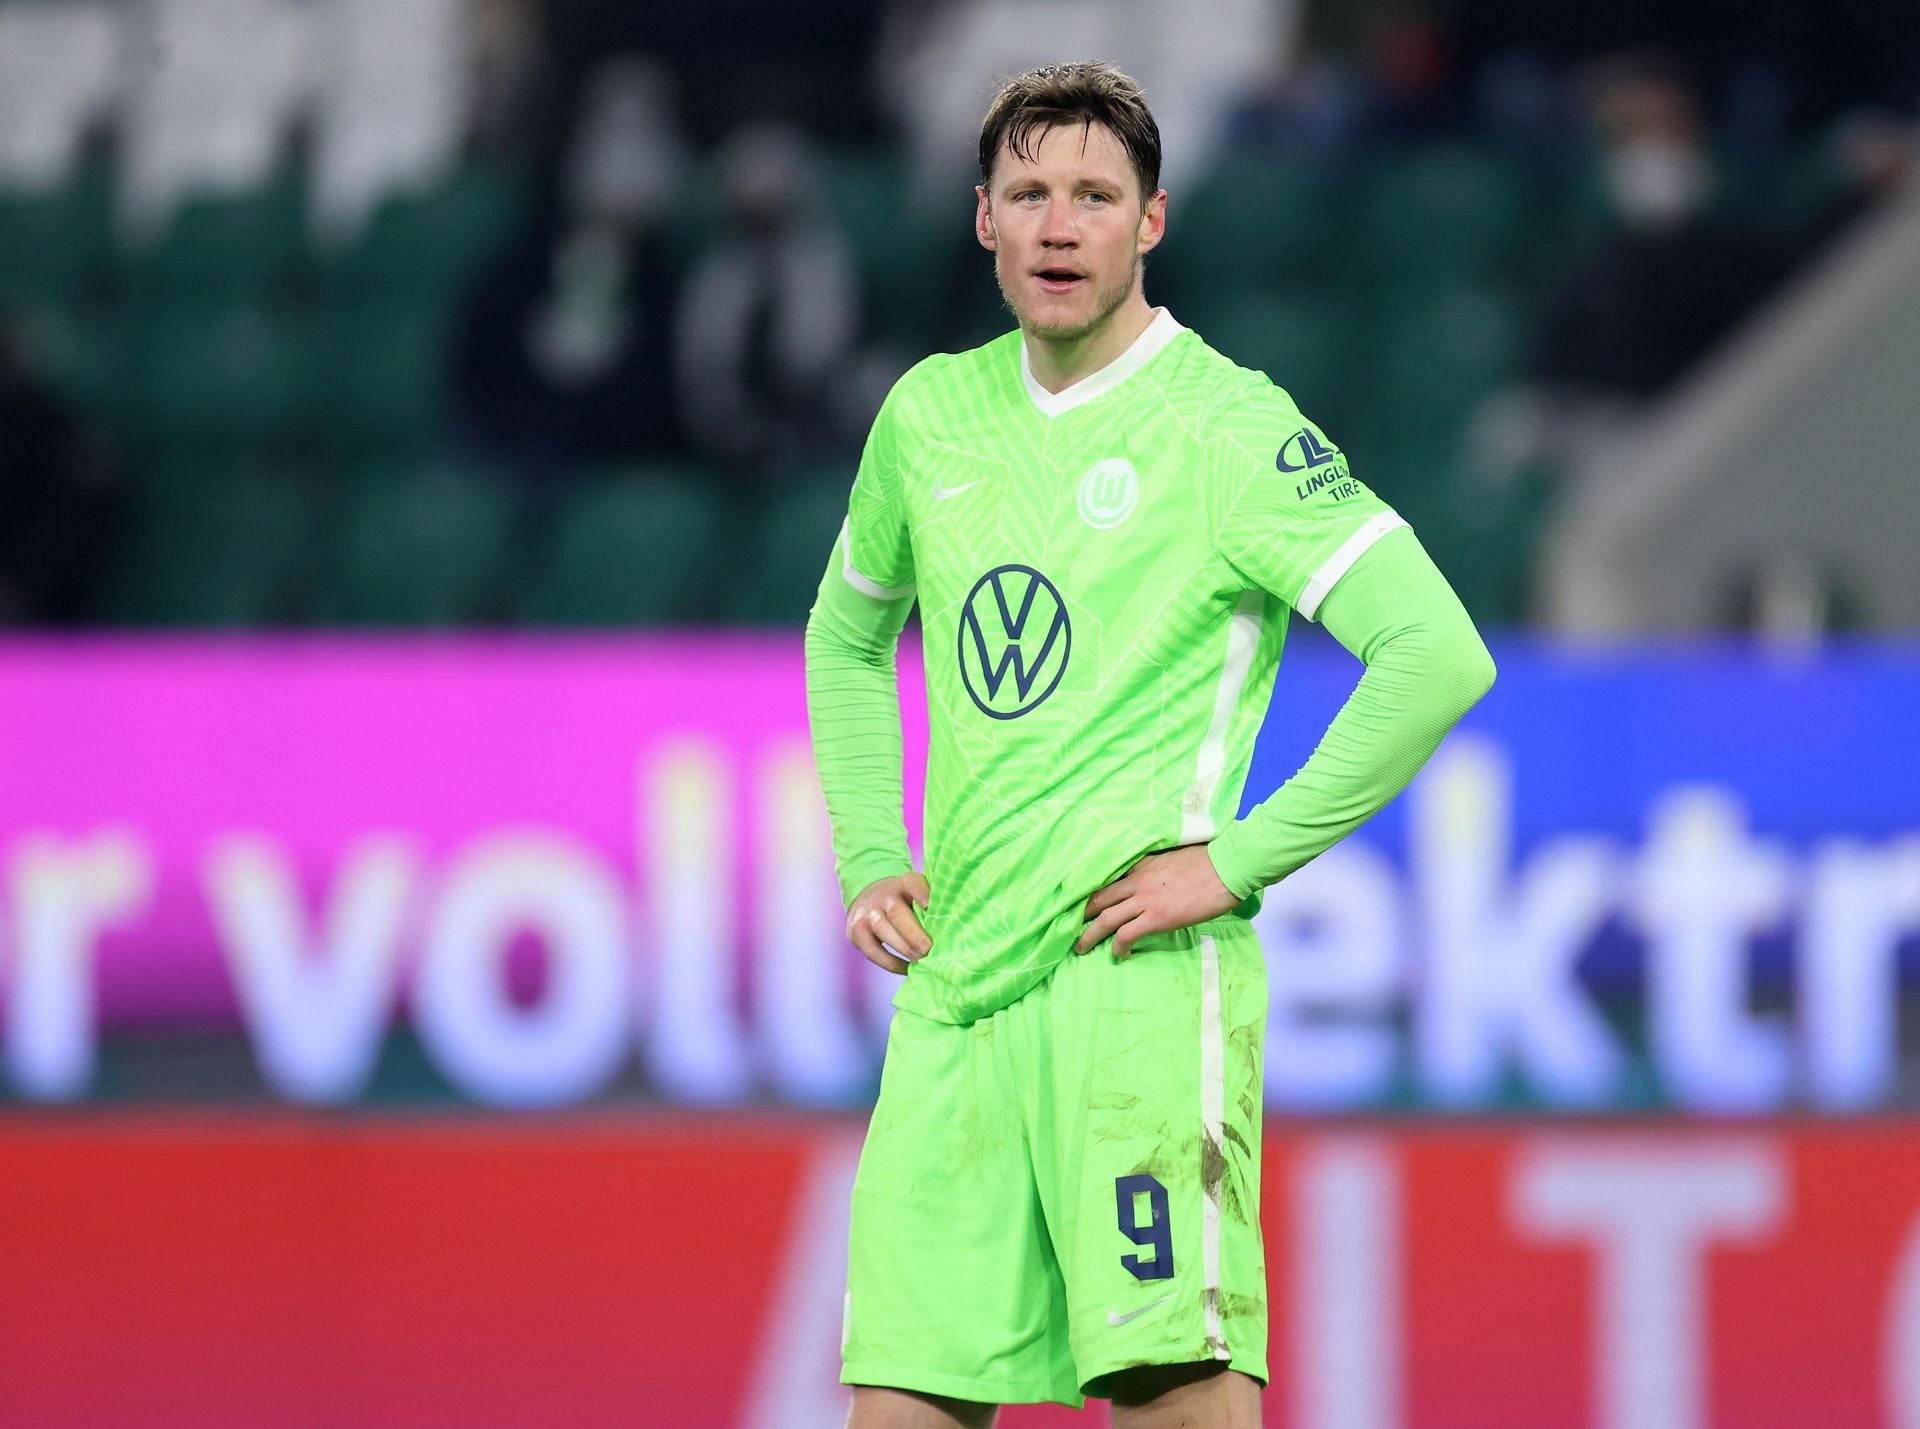 VfL Wolfsburg will face Bochum on Sunday - Bundesliga